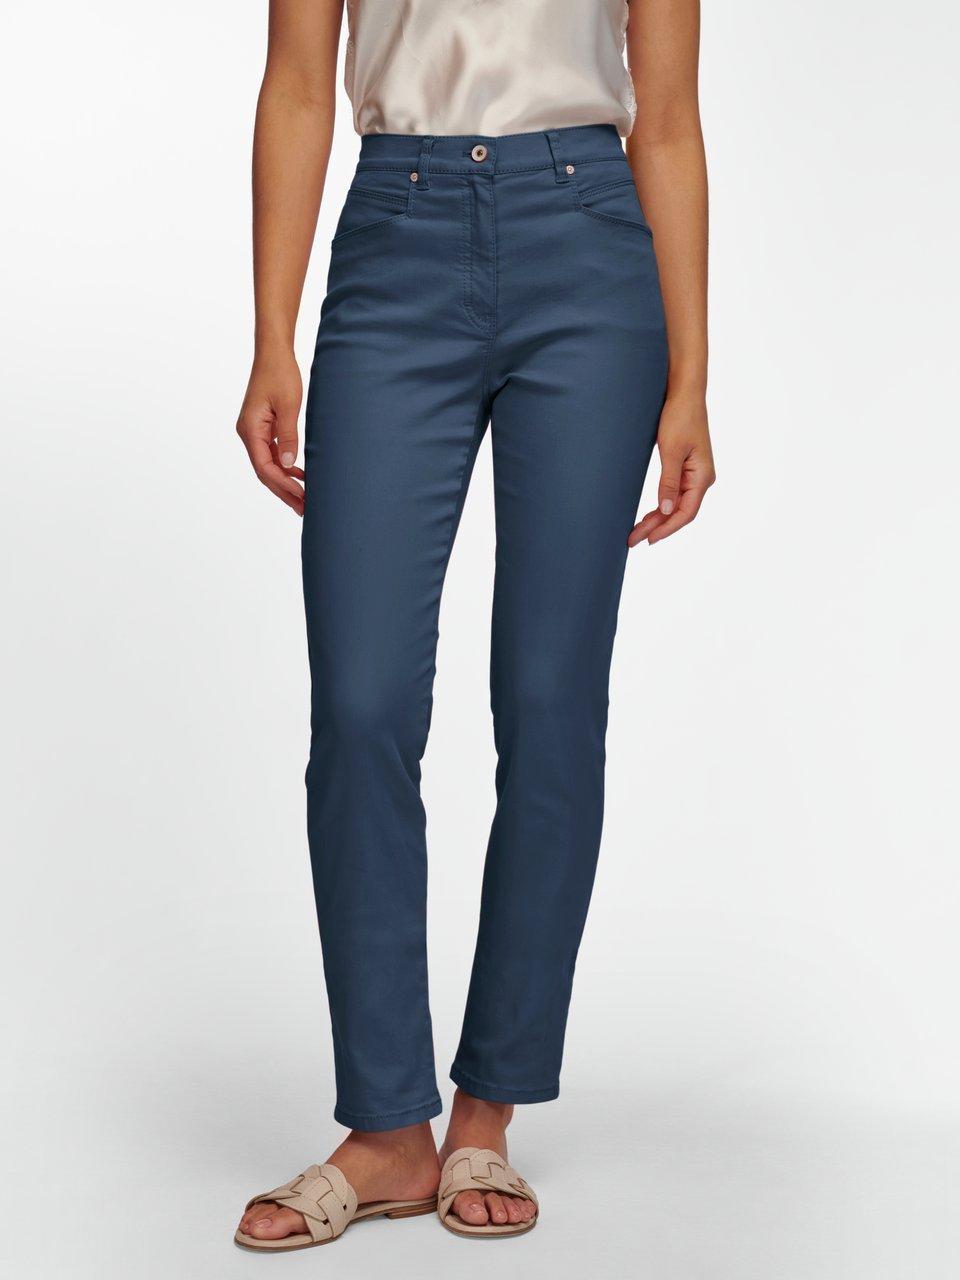 Raphaela by Brax - Comfort Plus jeans model Caren - blue-denim